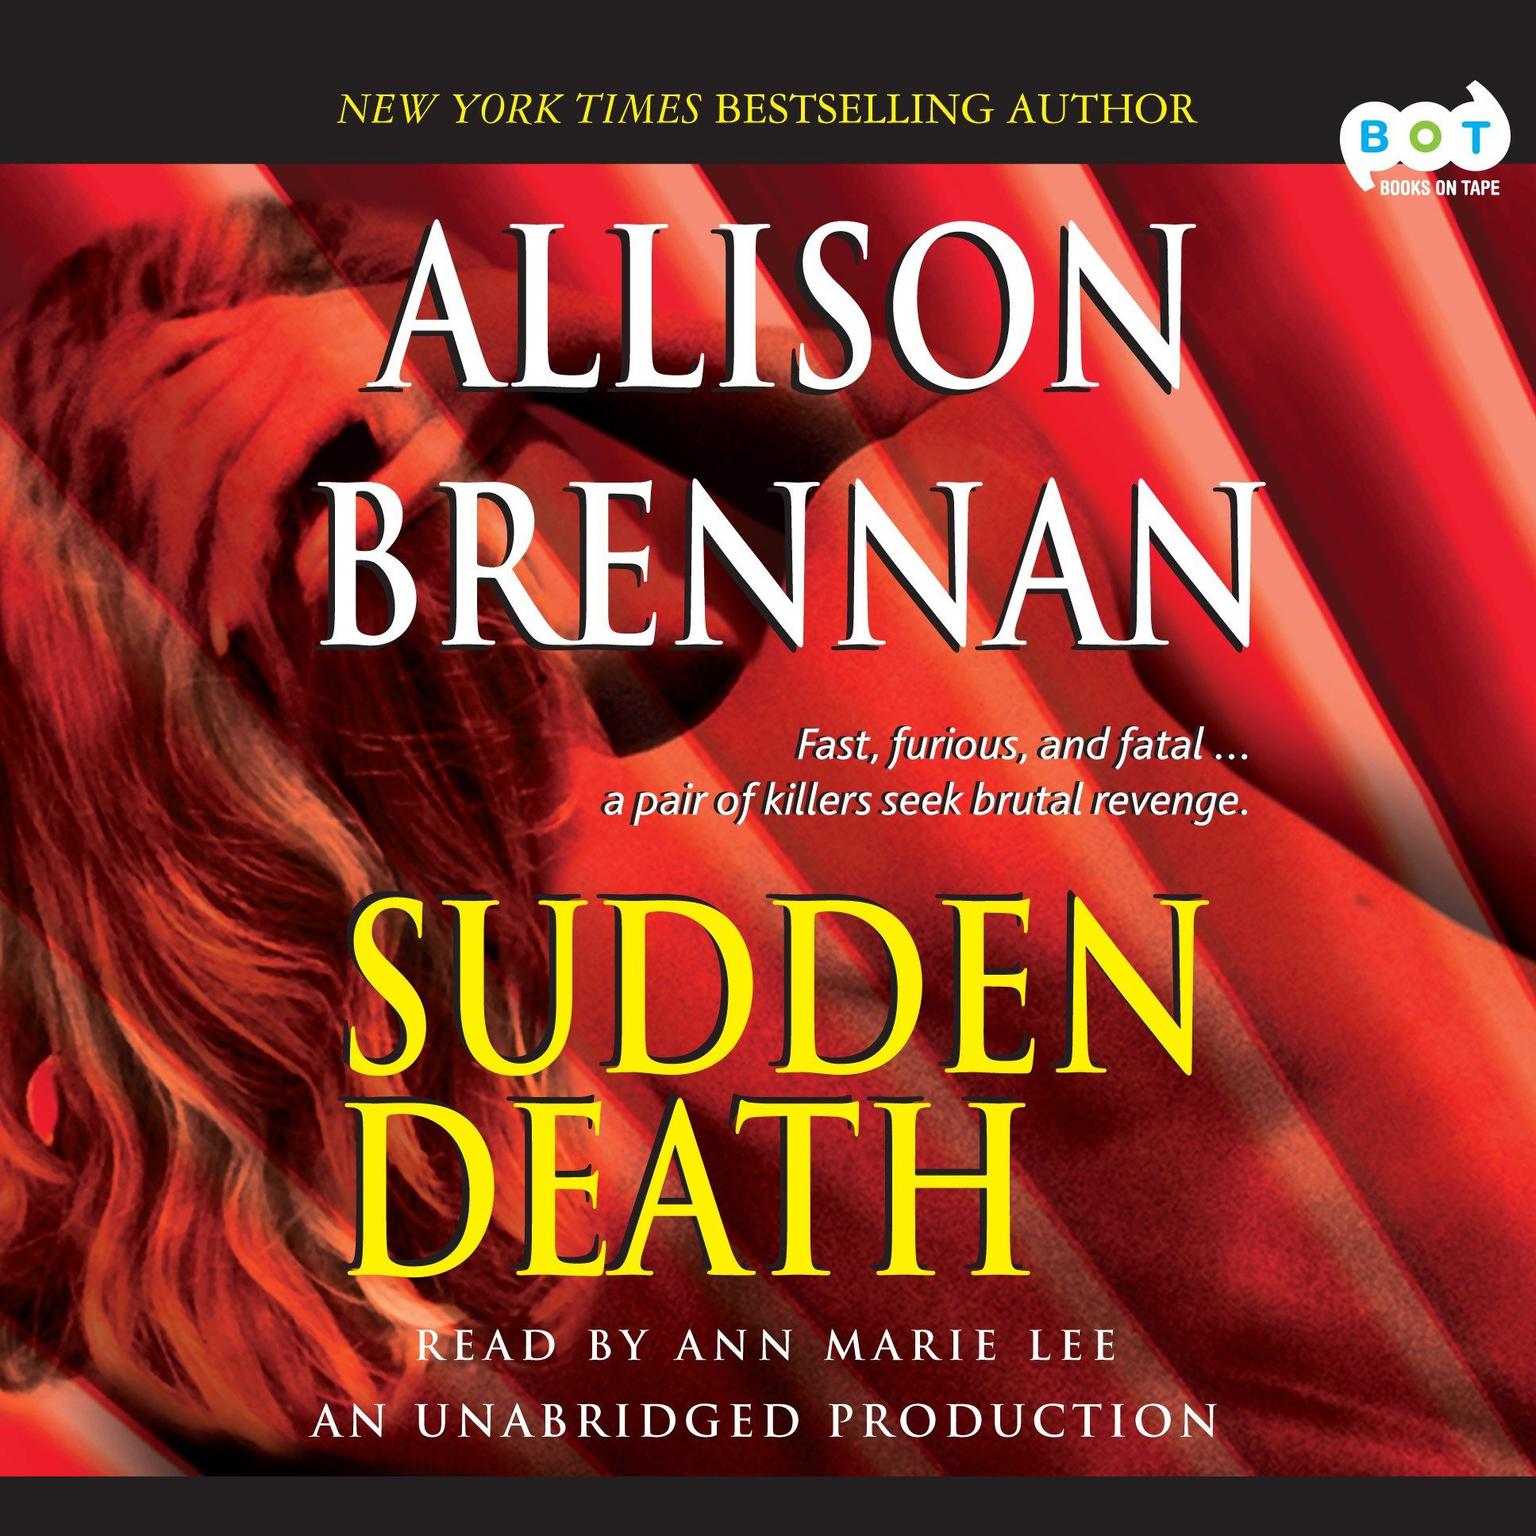 Sudden Death: A Novel of Suspense Audiobook, by Allison Brennan